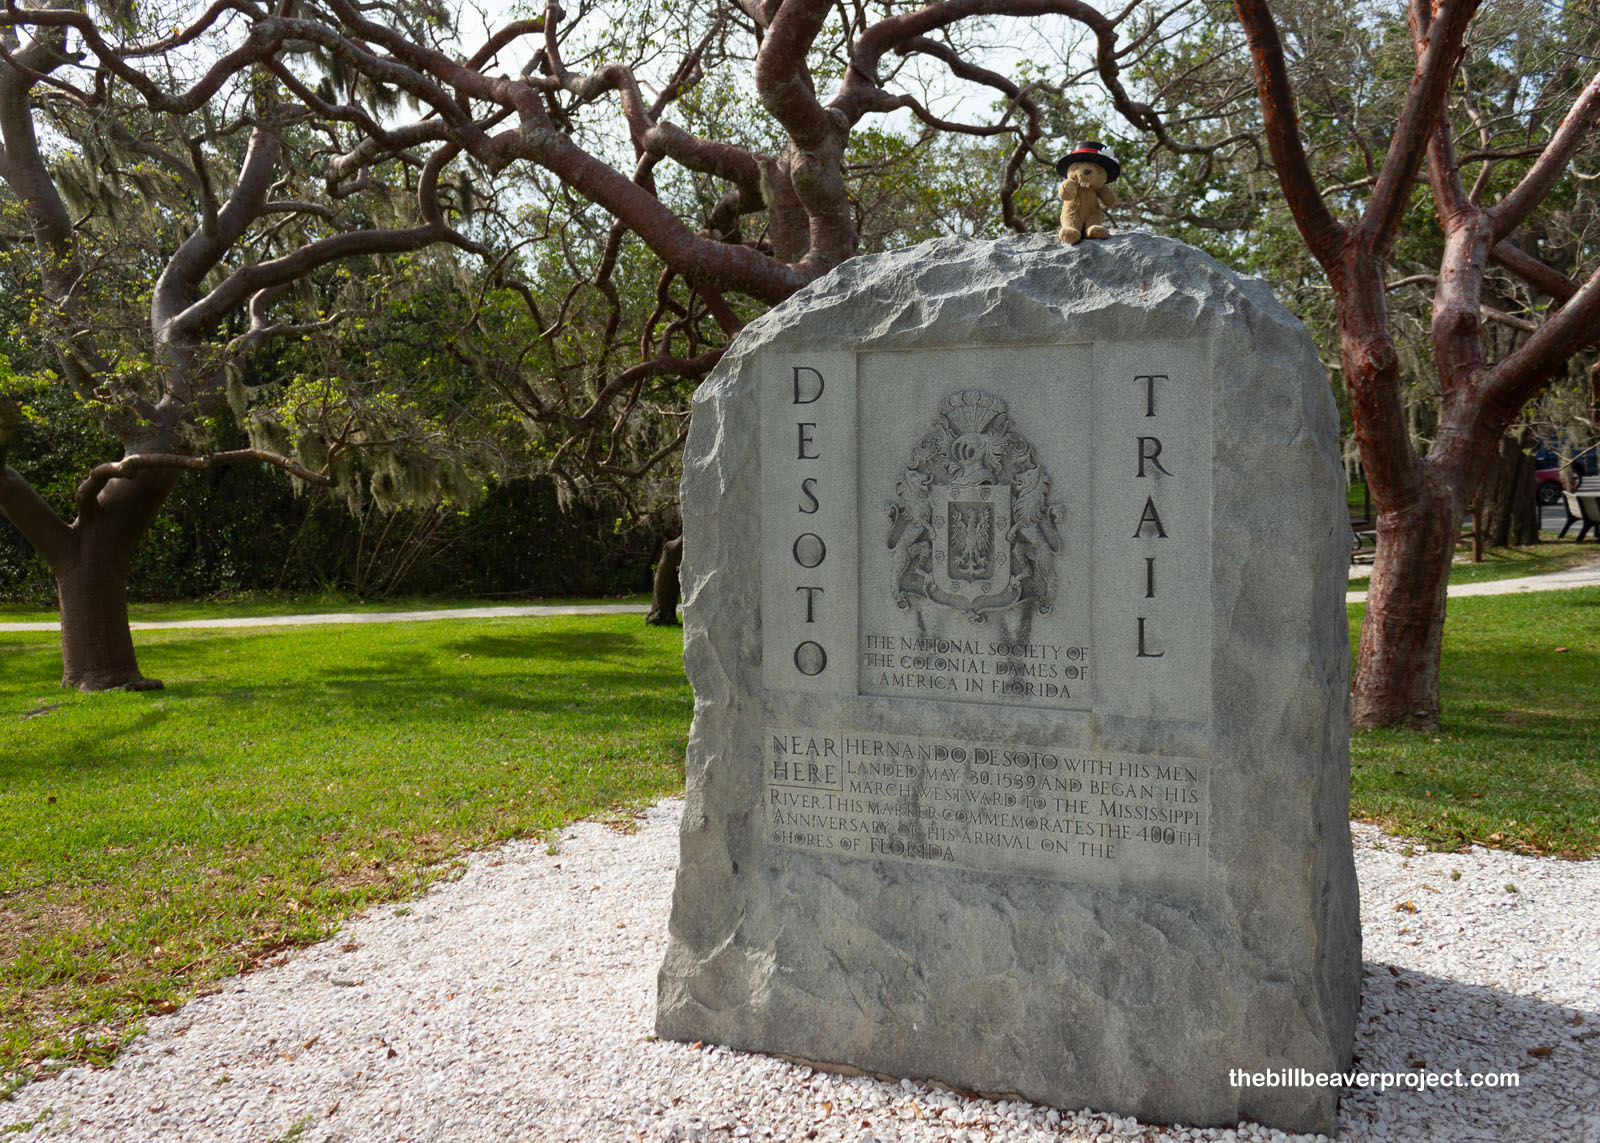 A monument commemorating the start of De Soto's journey!